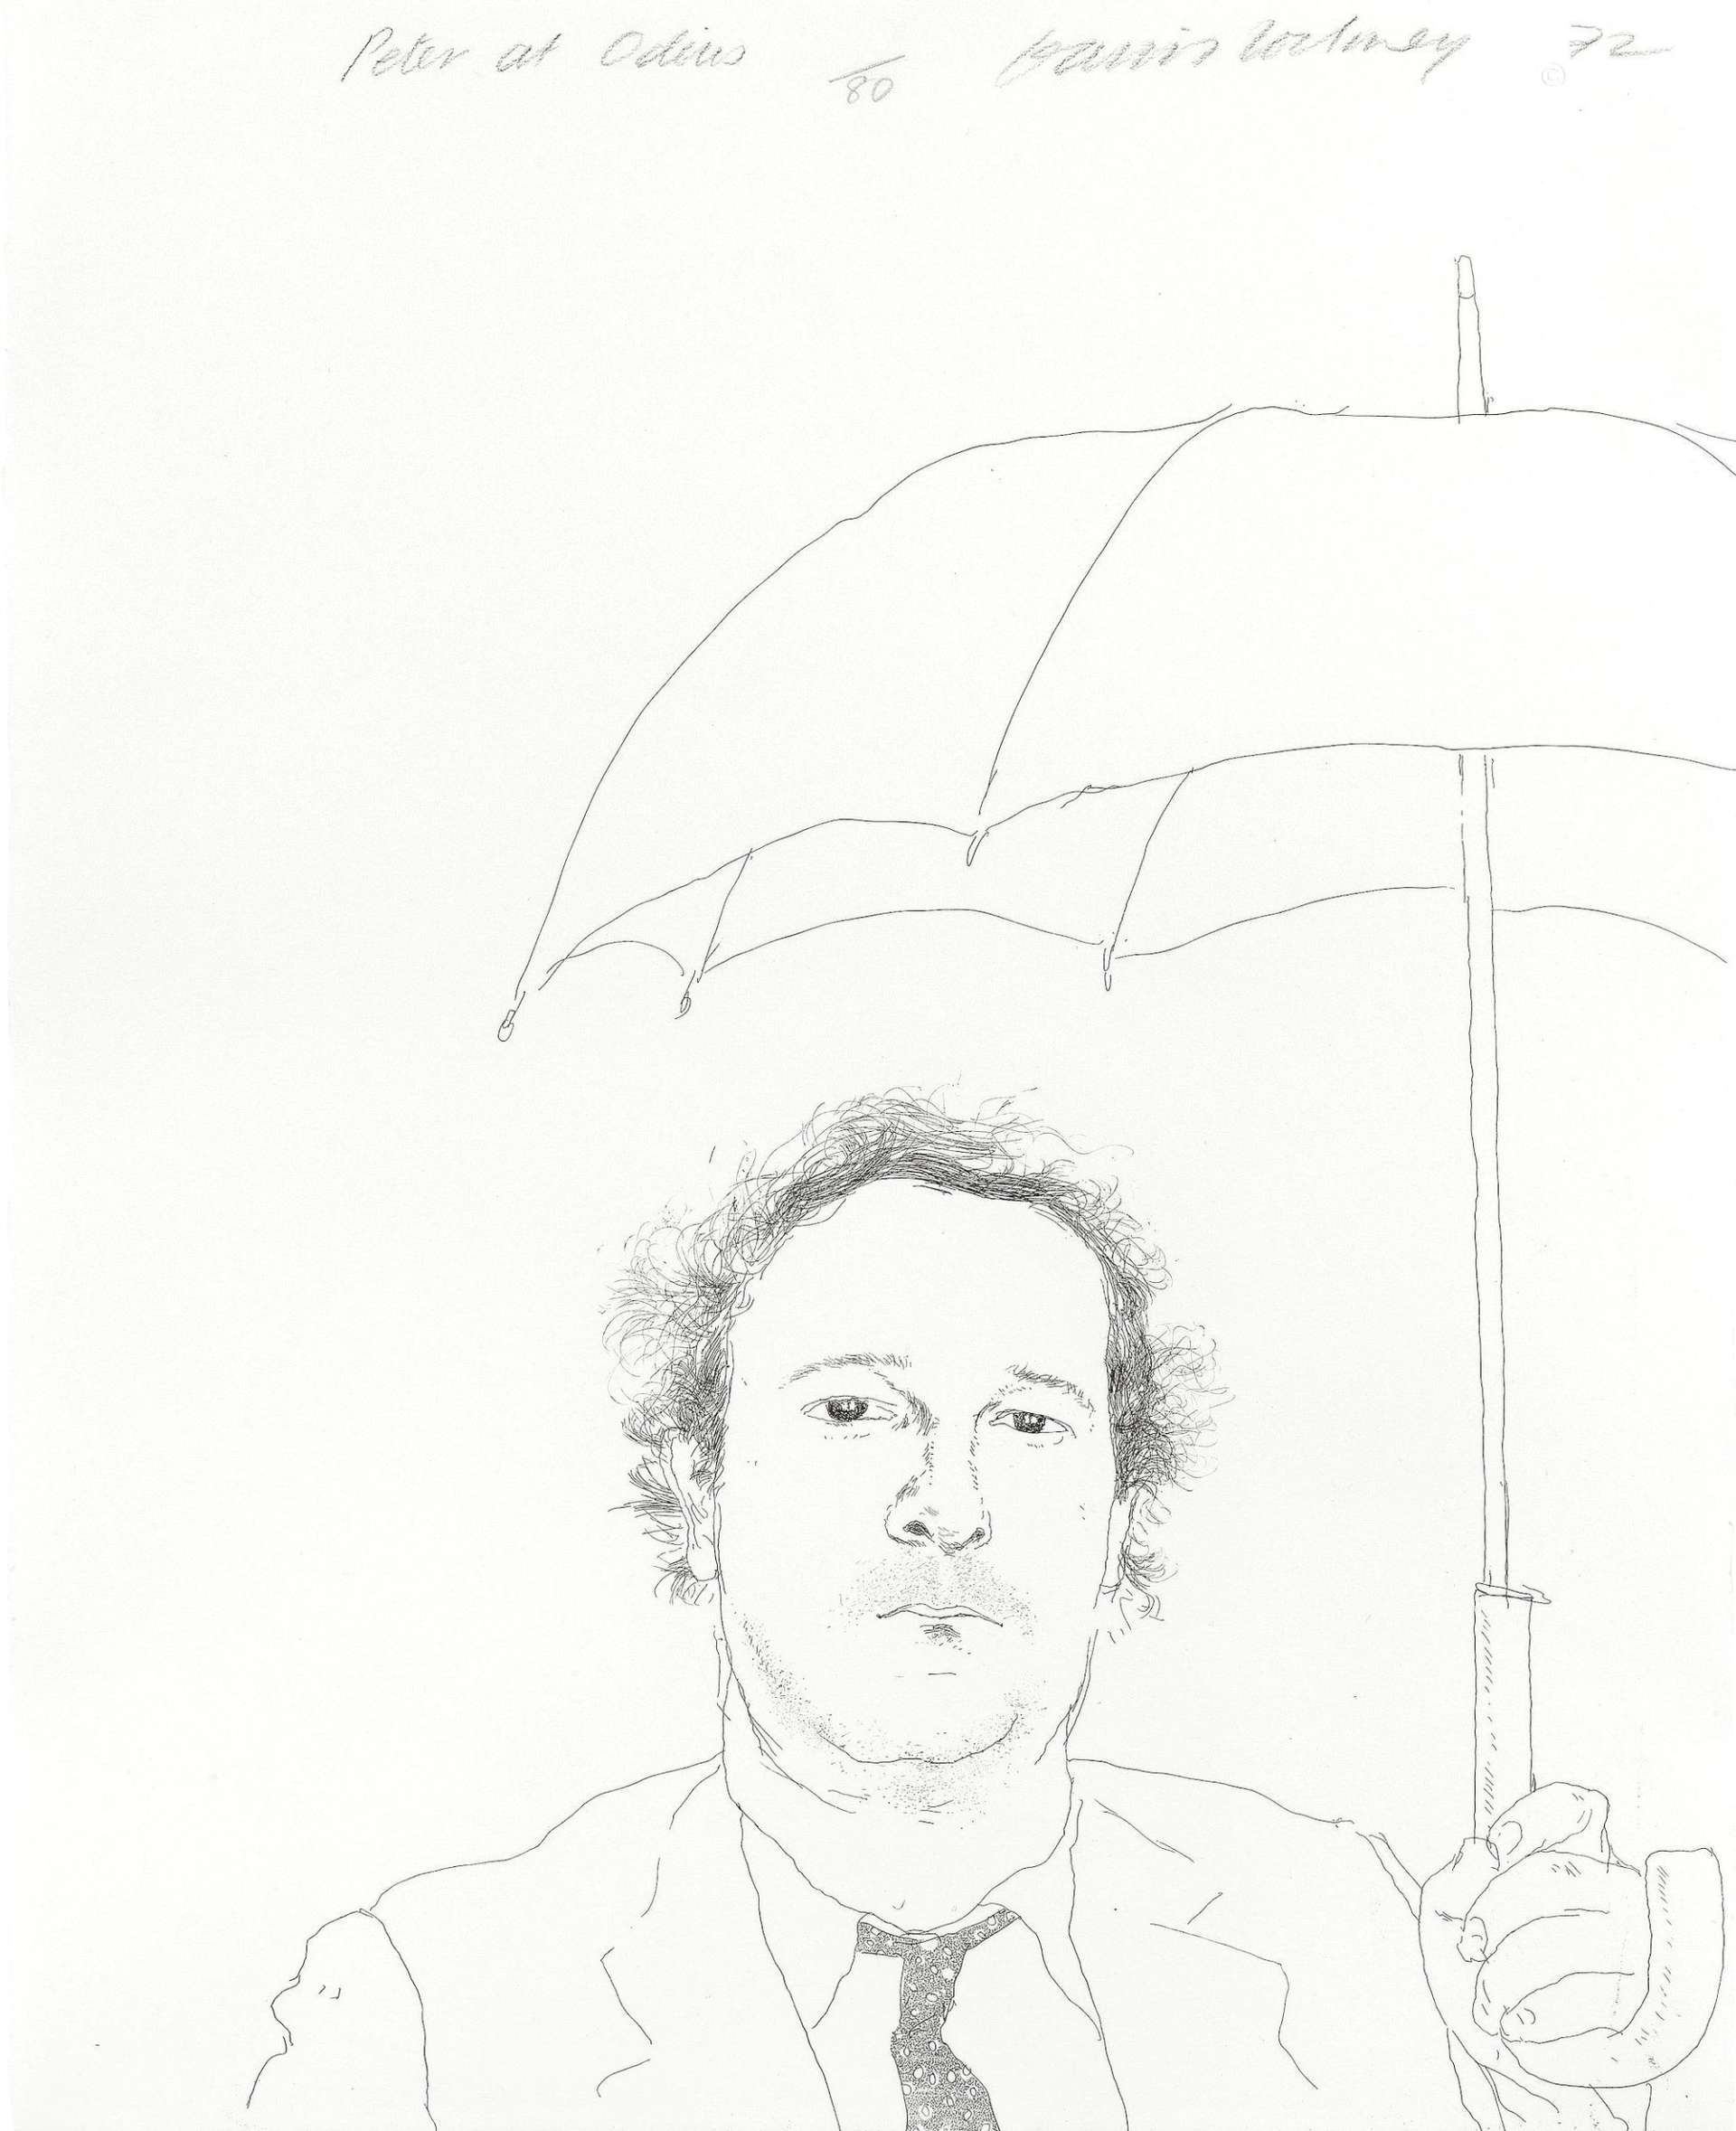 Peter At Odins - Signed Print by David Hockney 1972 - MyArtBroker